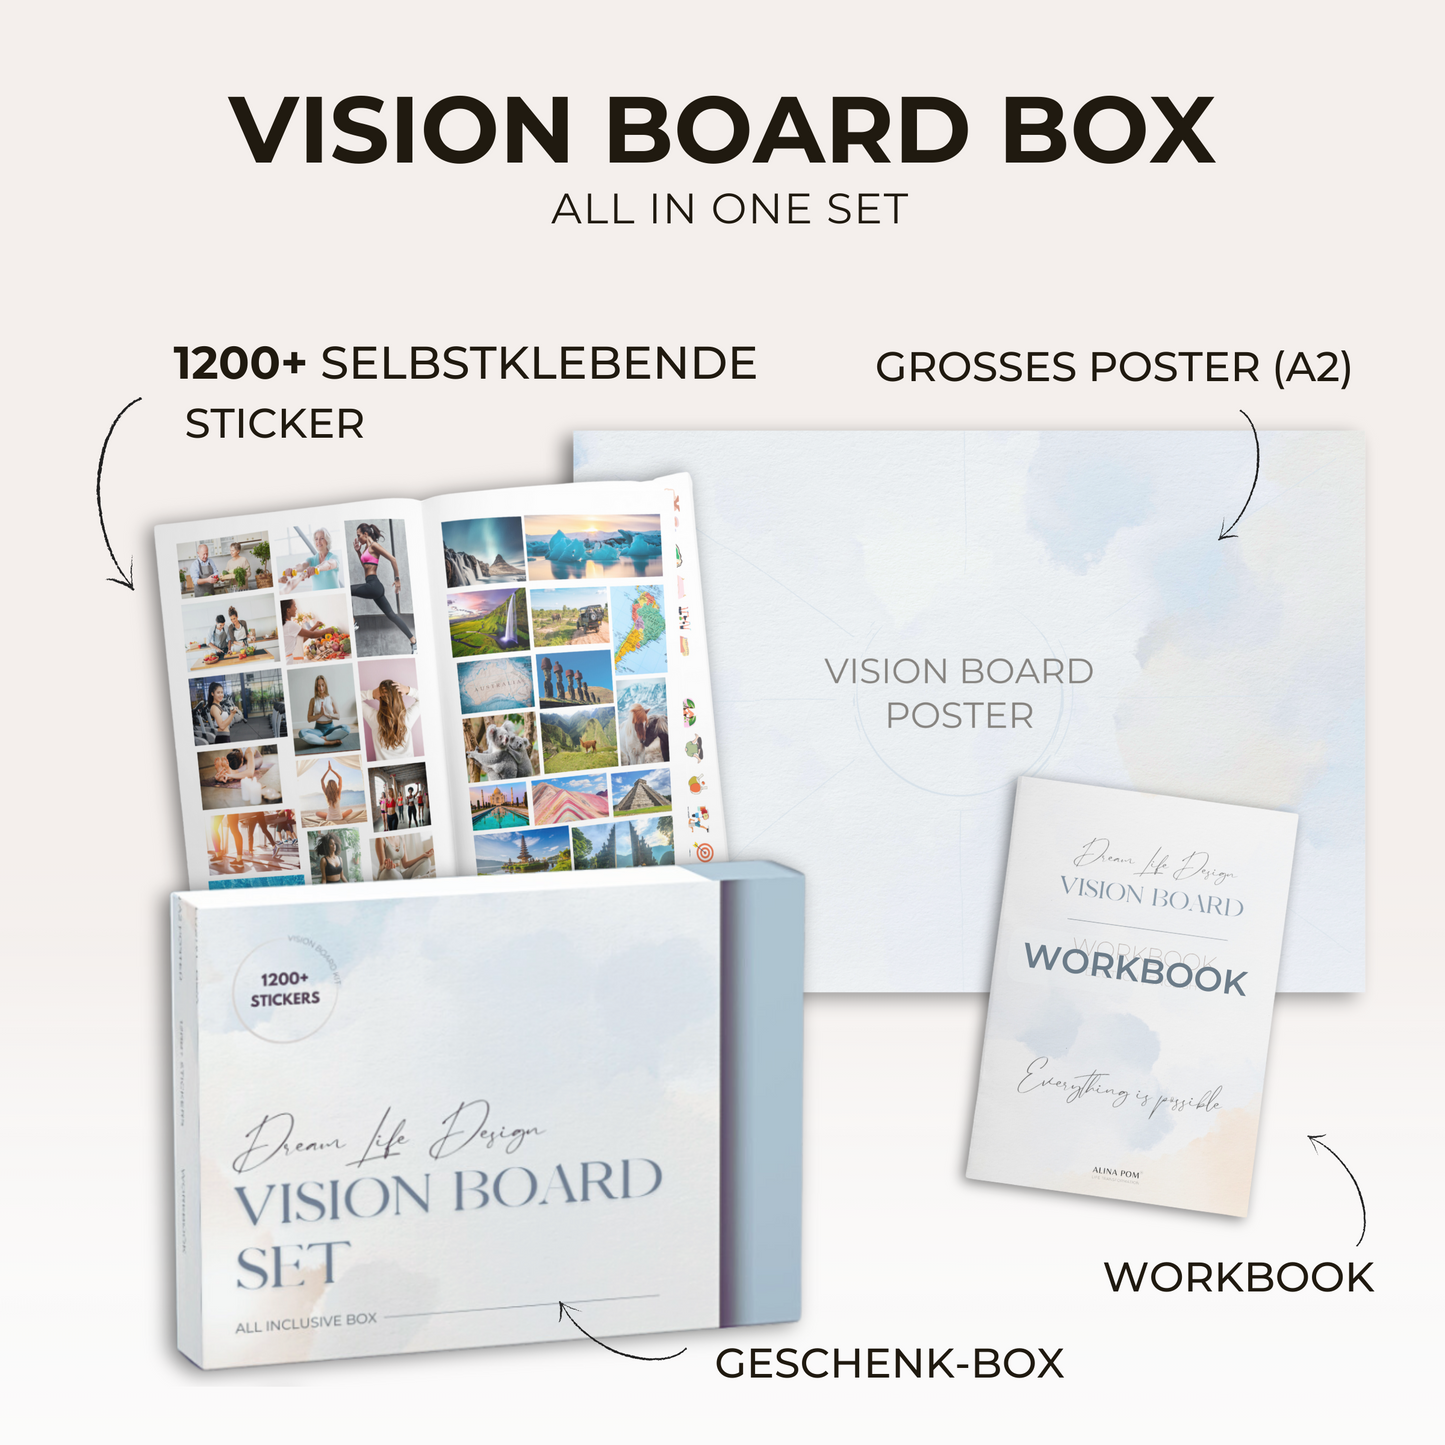 Vision Board Set | All in One Box inkl. A2 Poster, 1200+ selbstklebende Bilder & Sticker, Workbook